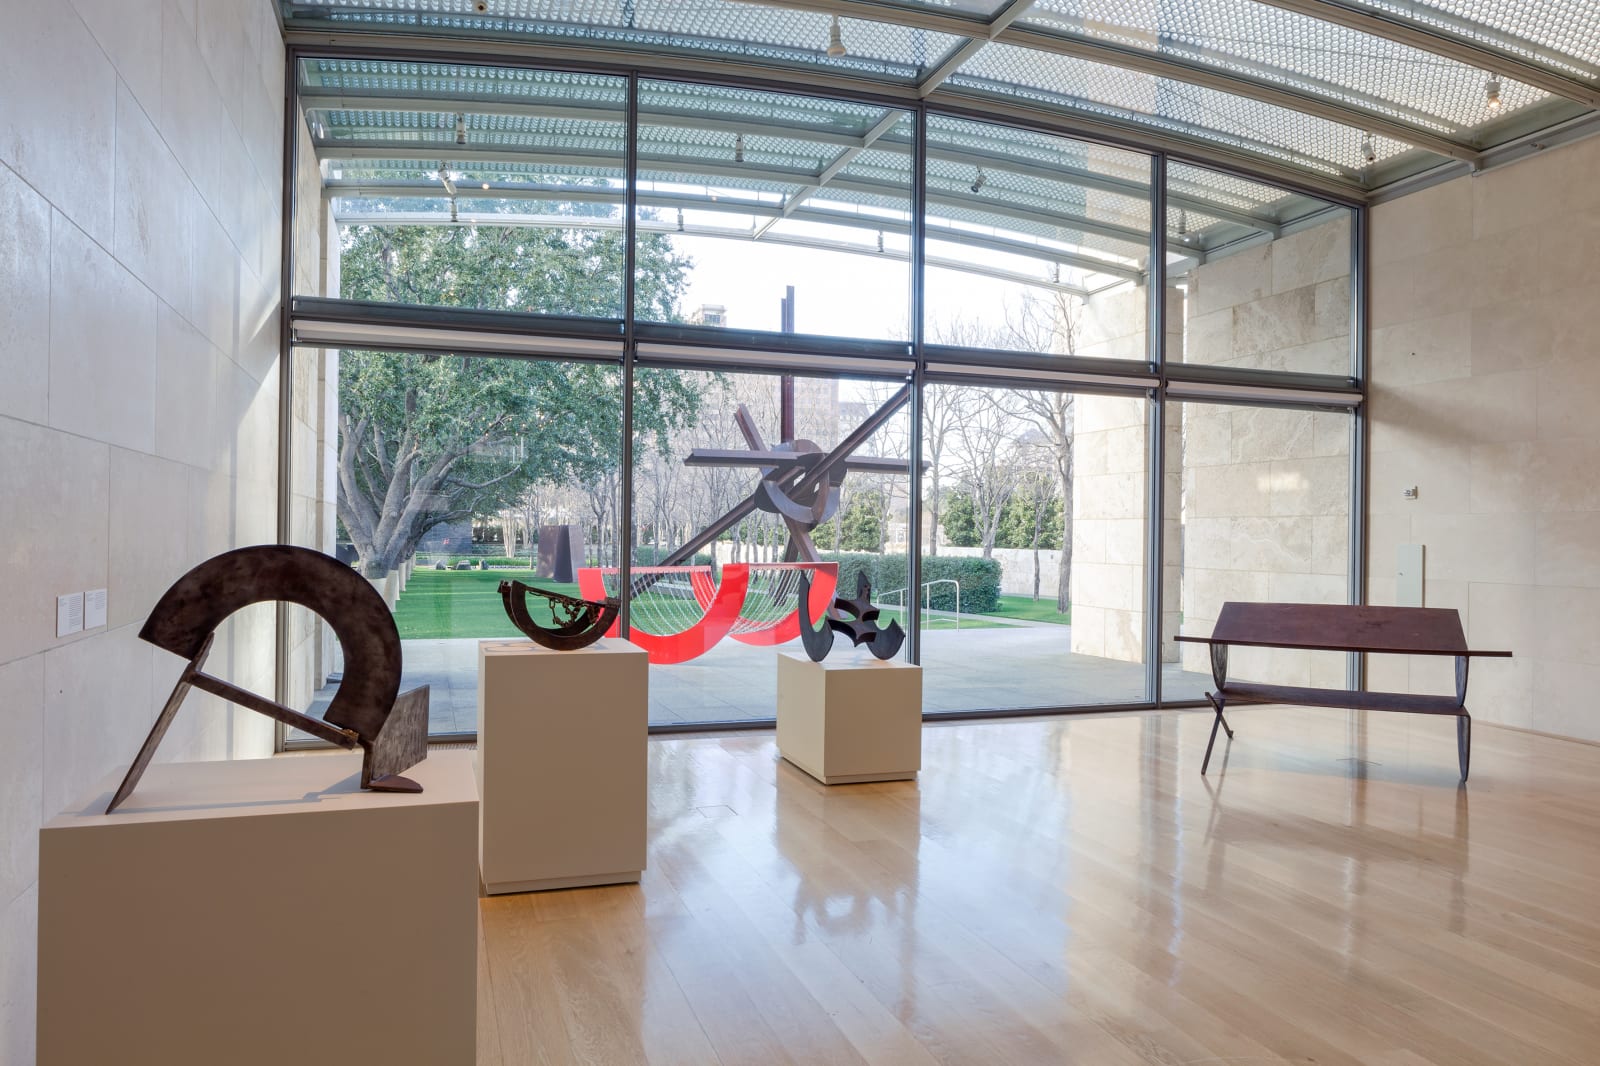 <div class="additional_caption">'Melvin Edwards: Five Decades', Nasher Sculpture Center, Dallas, Texas (2015)</div>